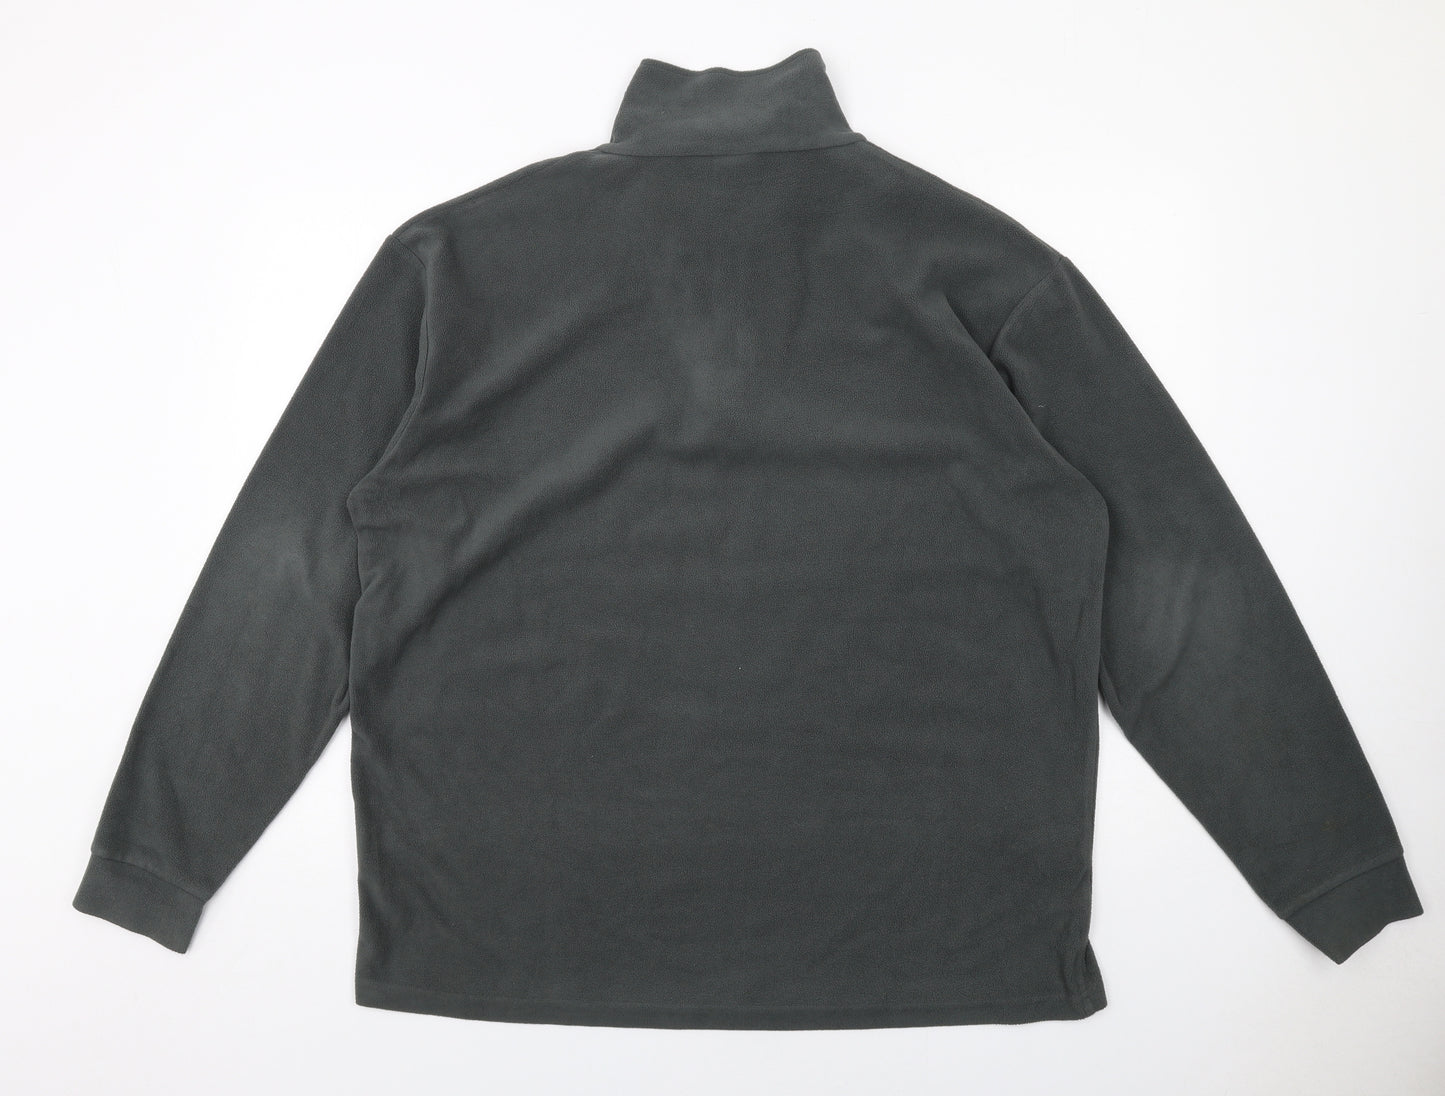 Trespass Mens Grey Polyester Pullover Sweatshirt Size XL